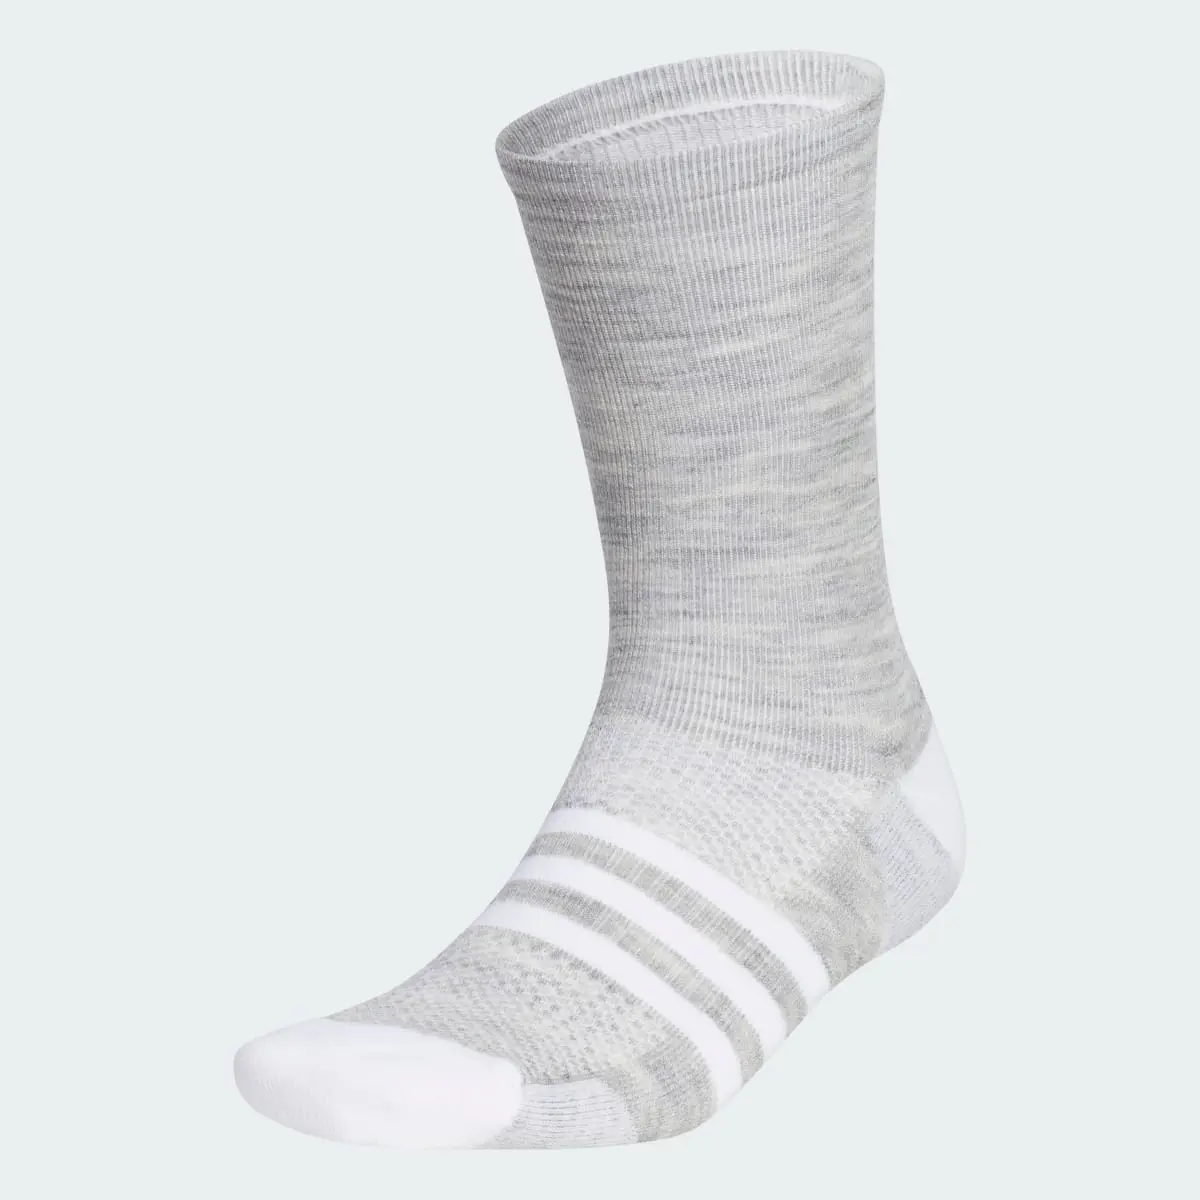 Adidas Wool Crew Socks. 1